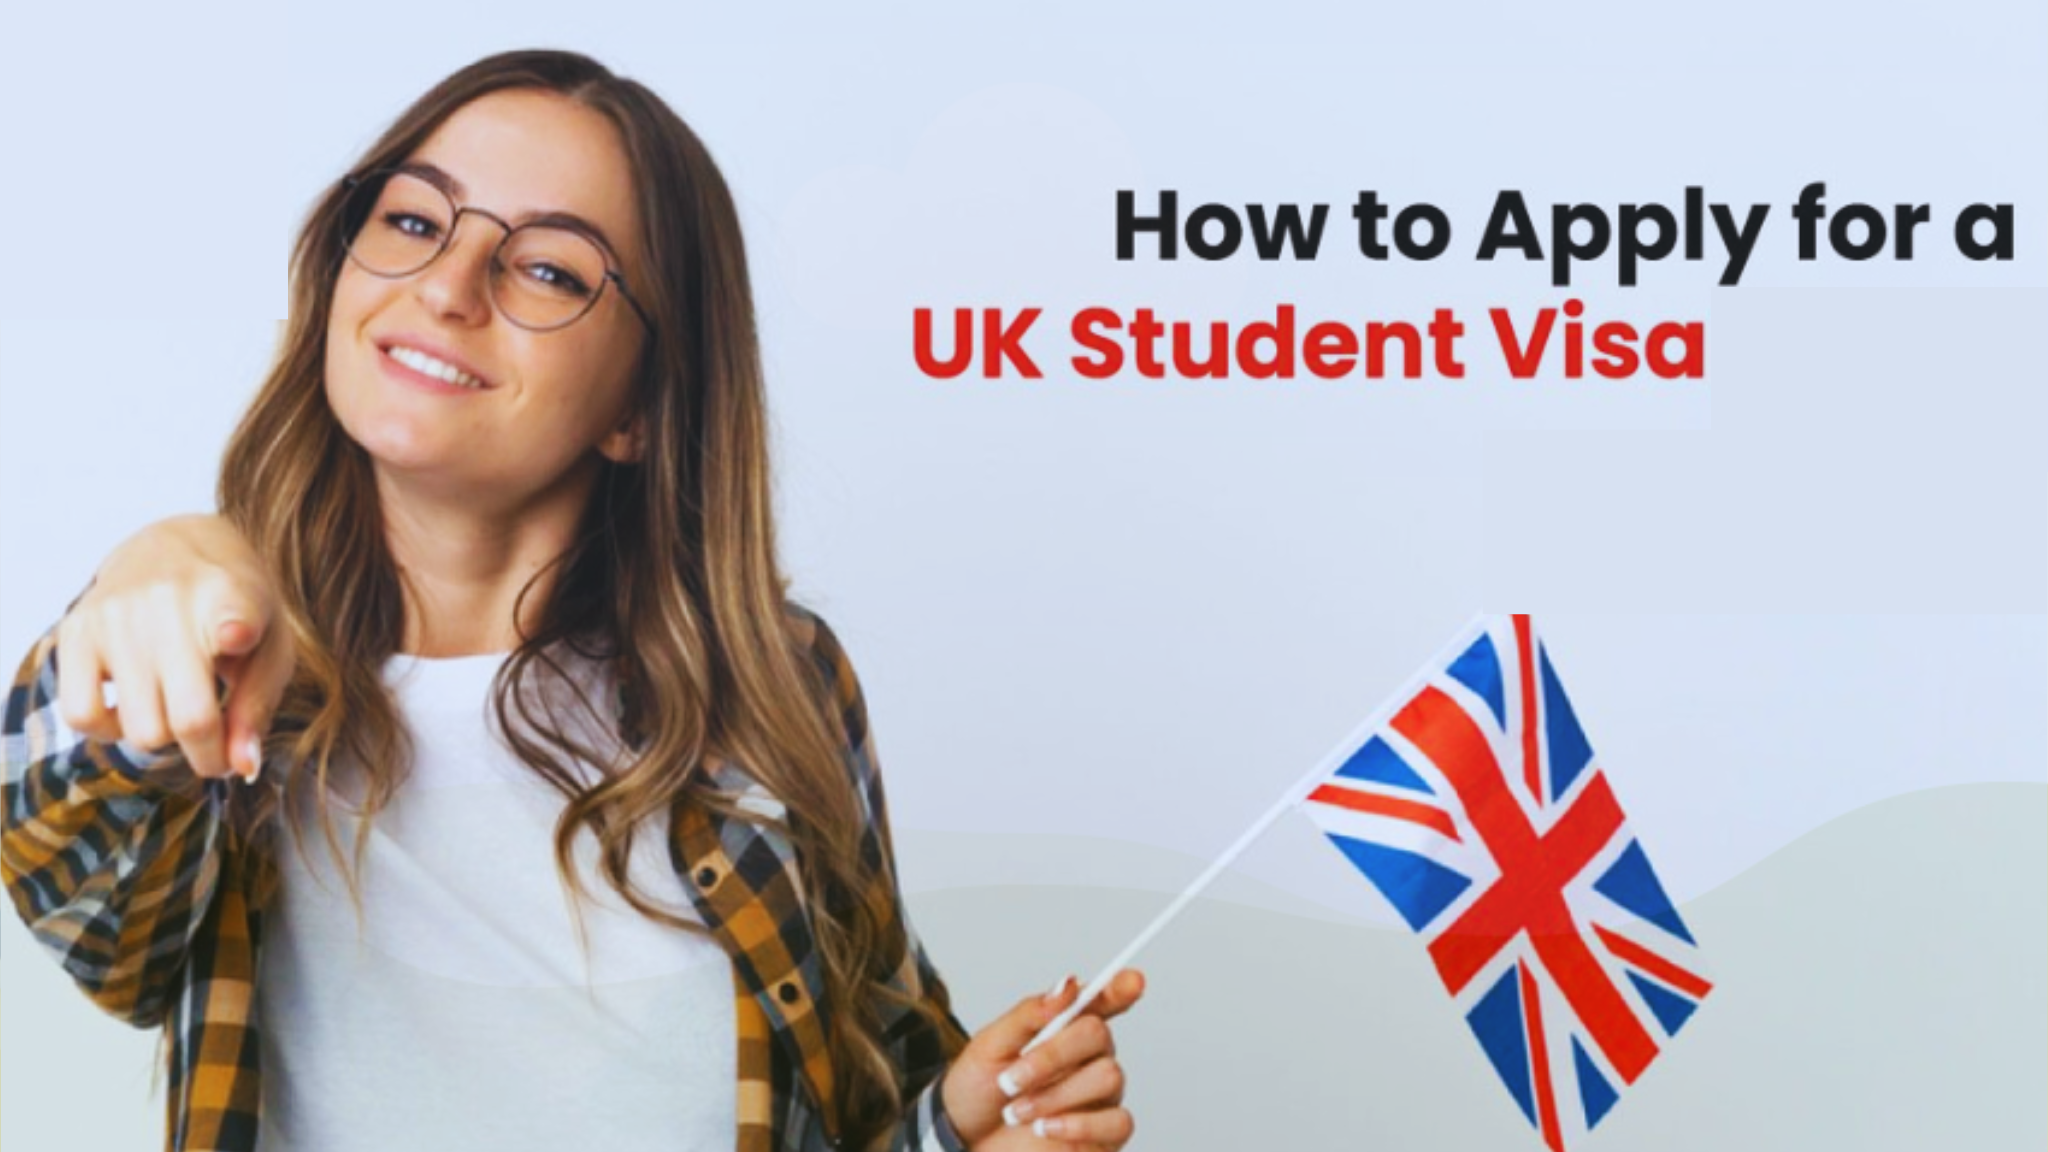 UK Study Visa